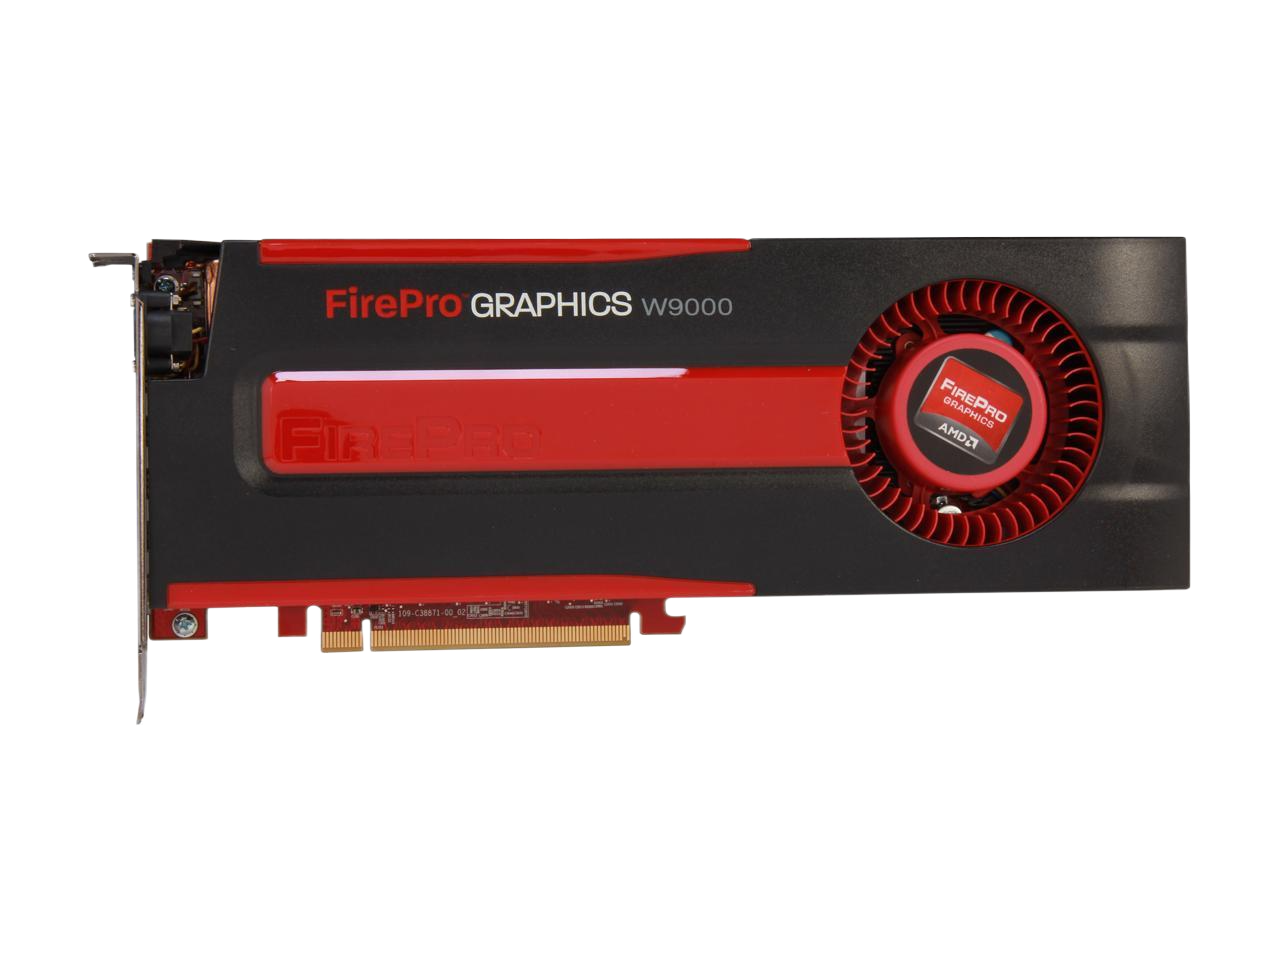 Sapphire FirePro W9000 6GB GDDR5 SDRAM 975 MHz Core PCI Express 3.0 x16 Full-length/Full-height Graphics Card 100-505859